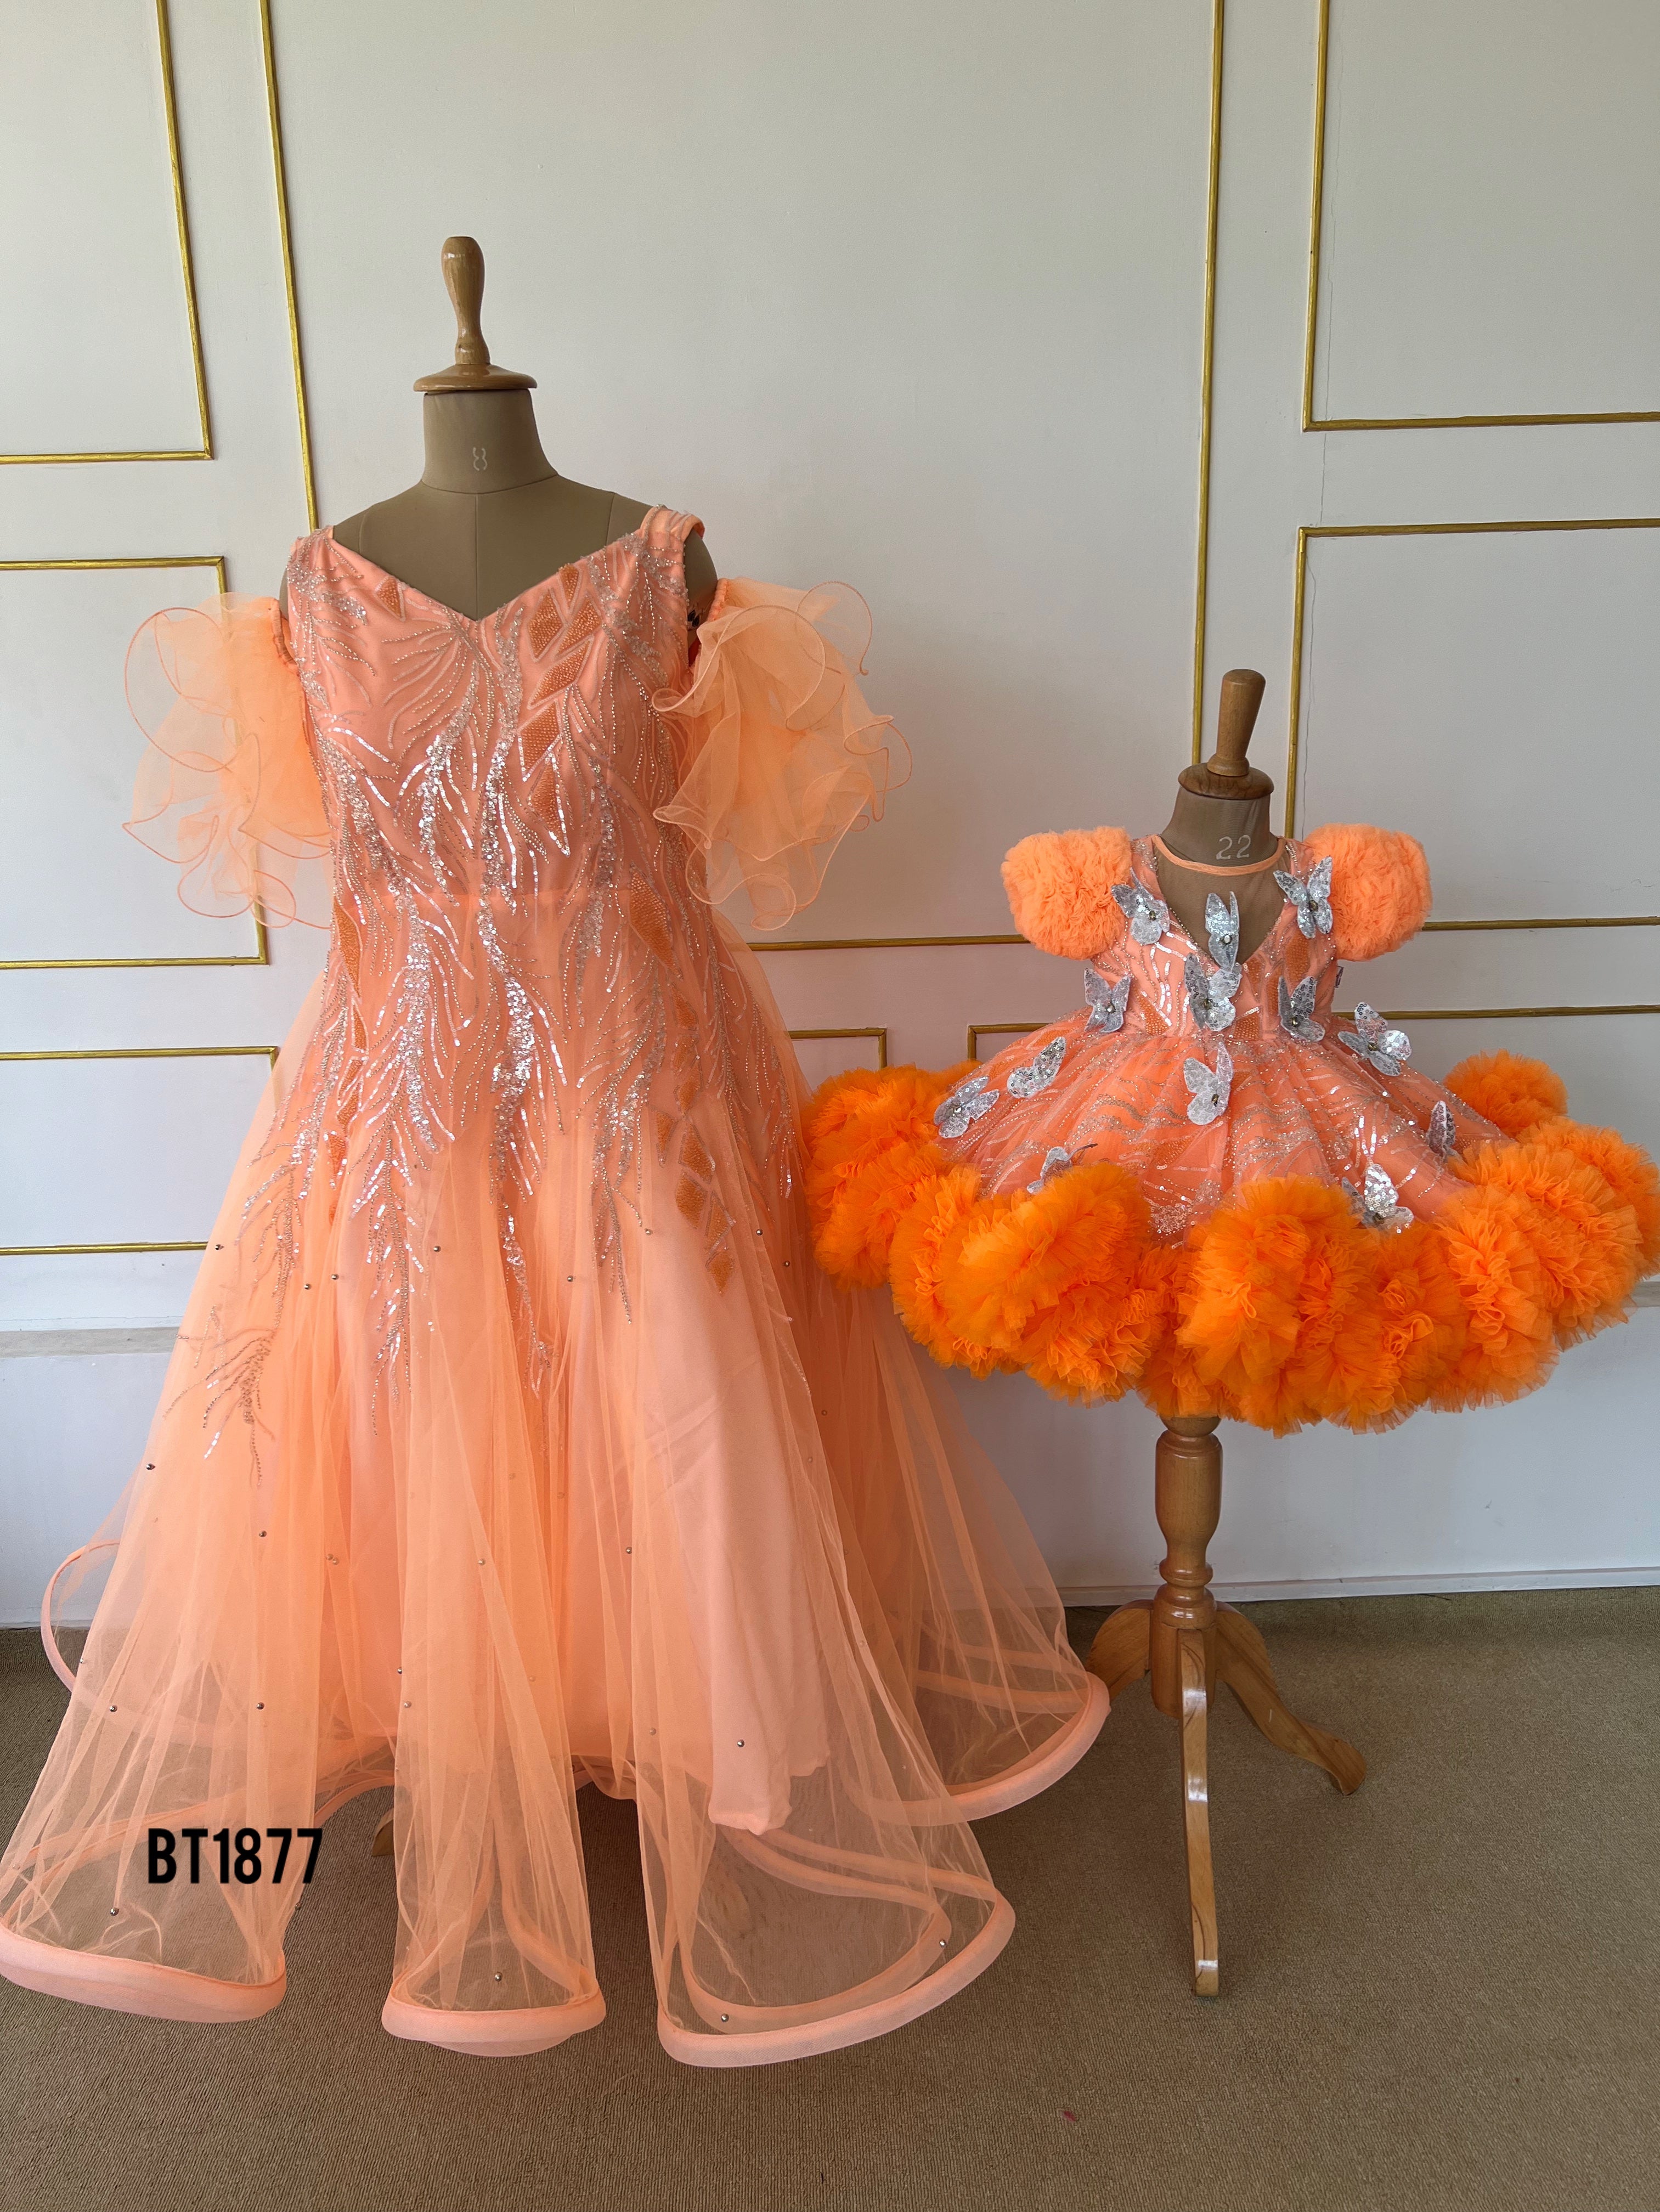 BT1877 Sunset Charm - Fluffy Orange Party Dress